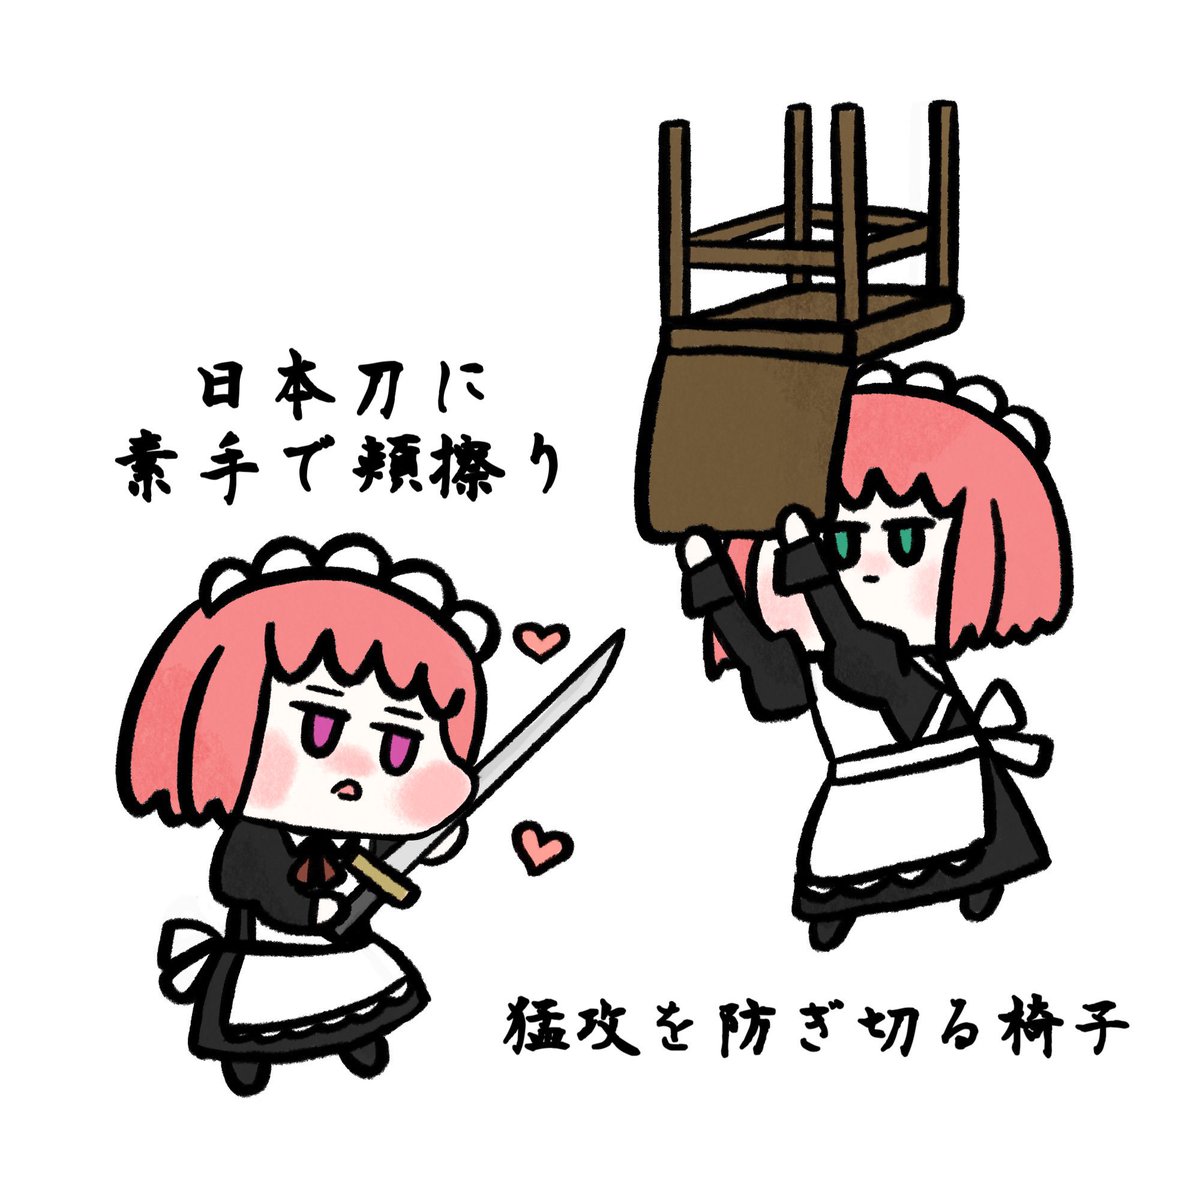 hisui (tsukihime) ,kohaku (tsukihime) multiple girls 2girls chibi apron siblings maid sisters  illustration images